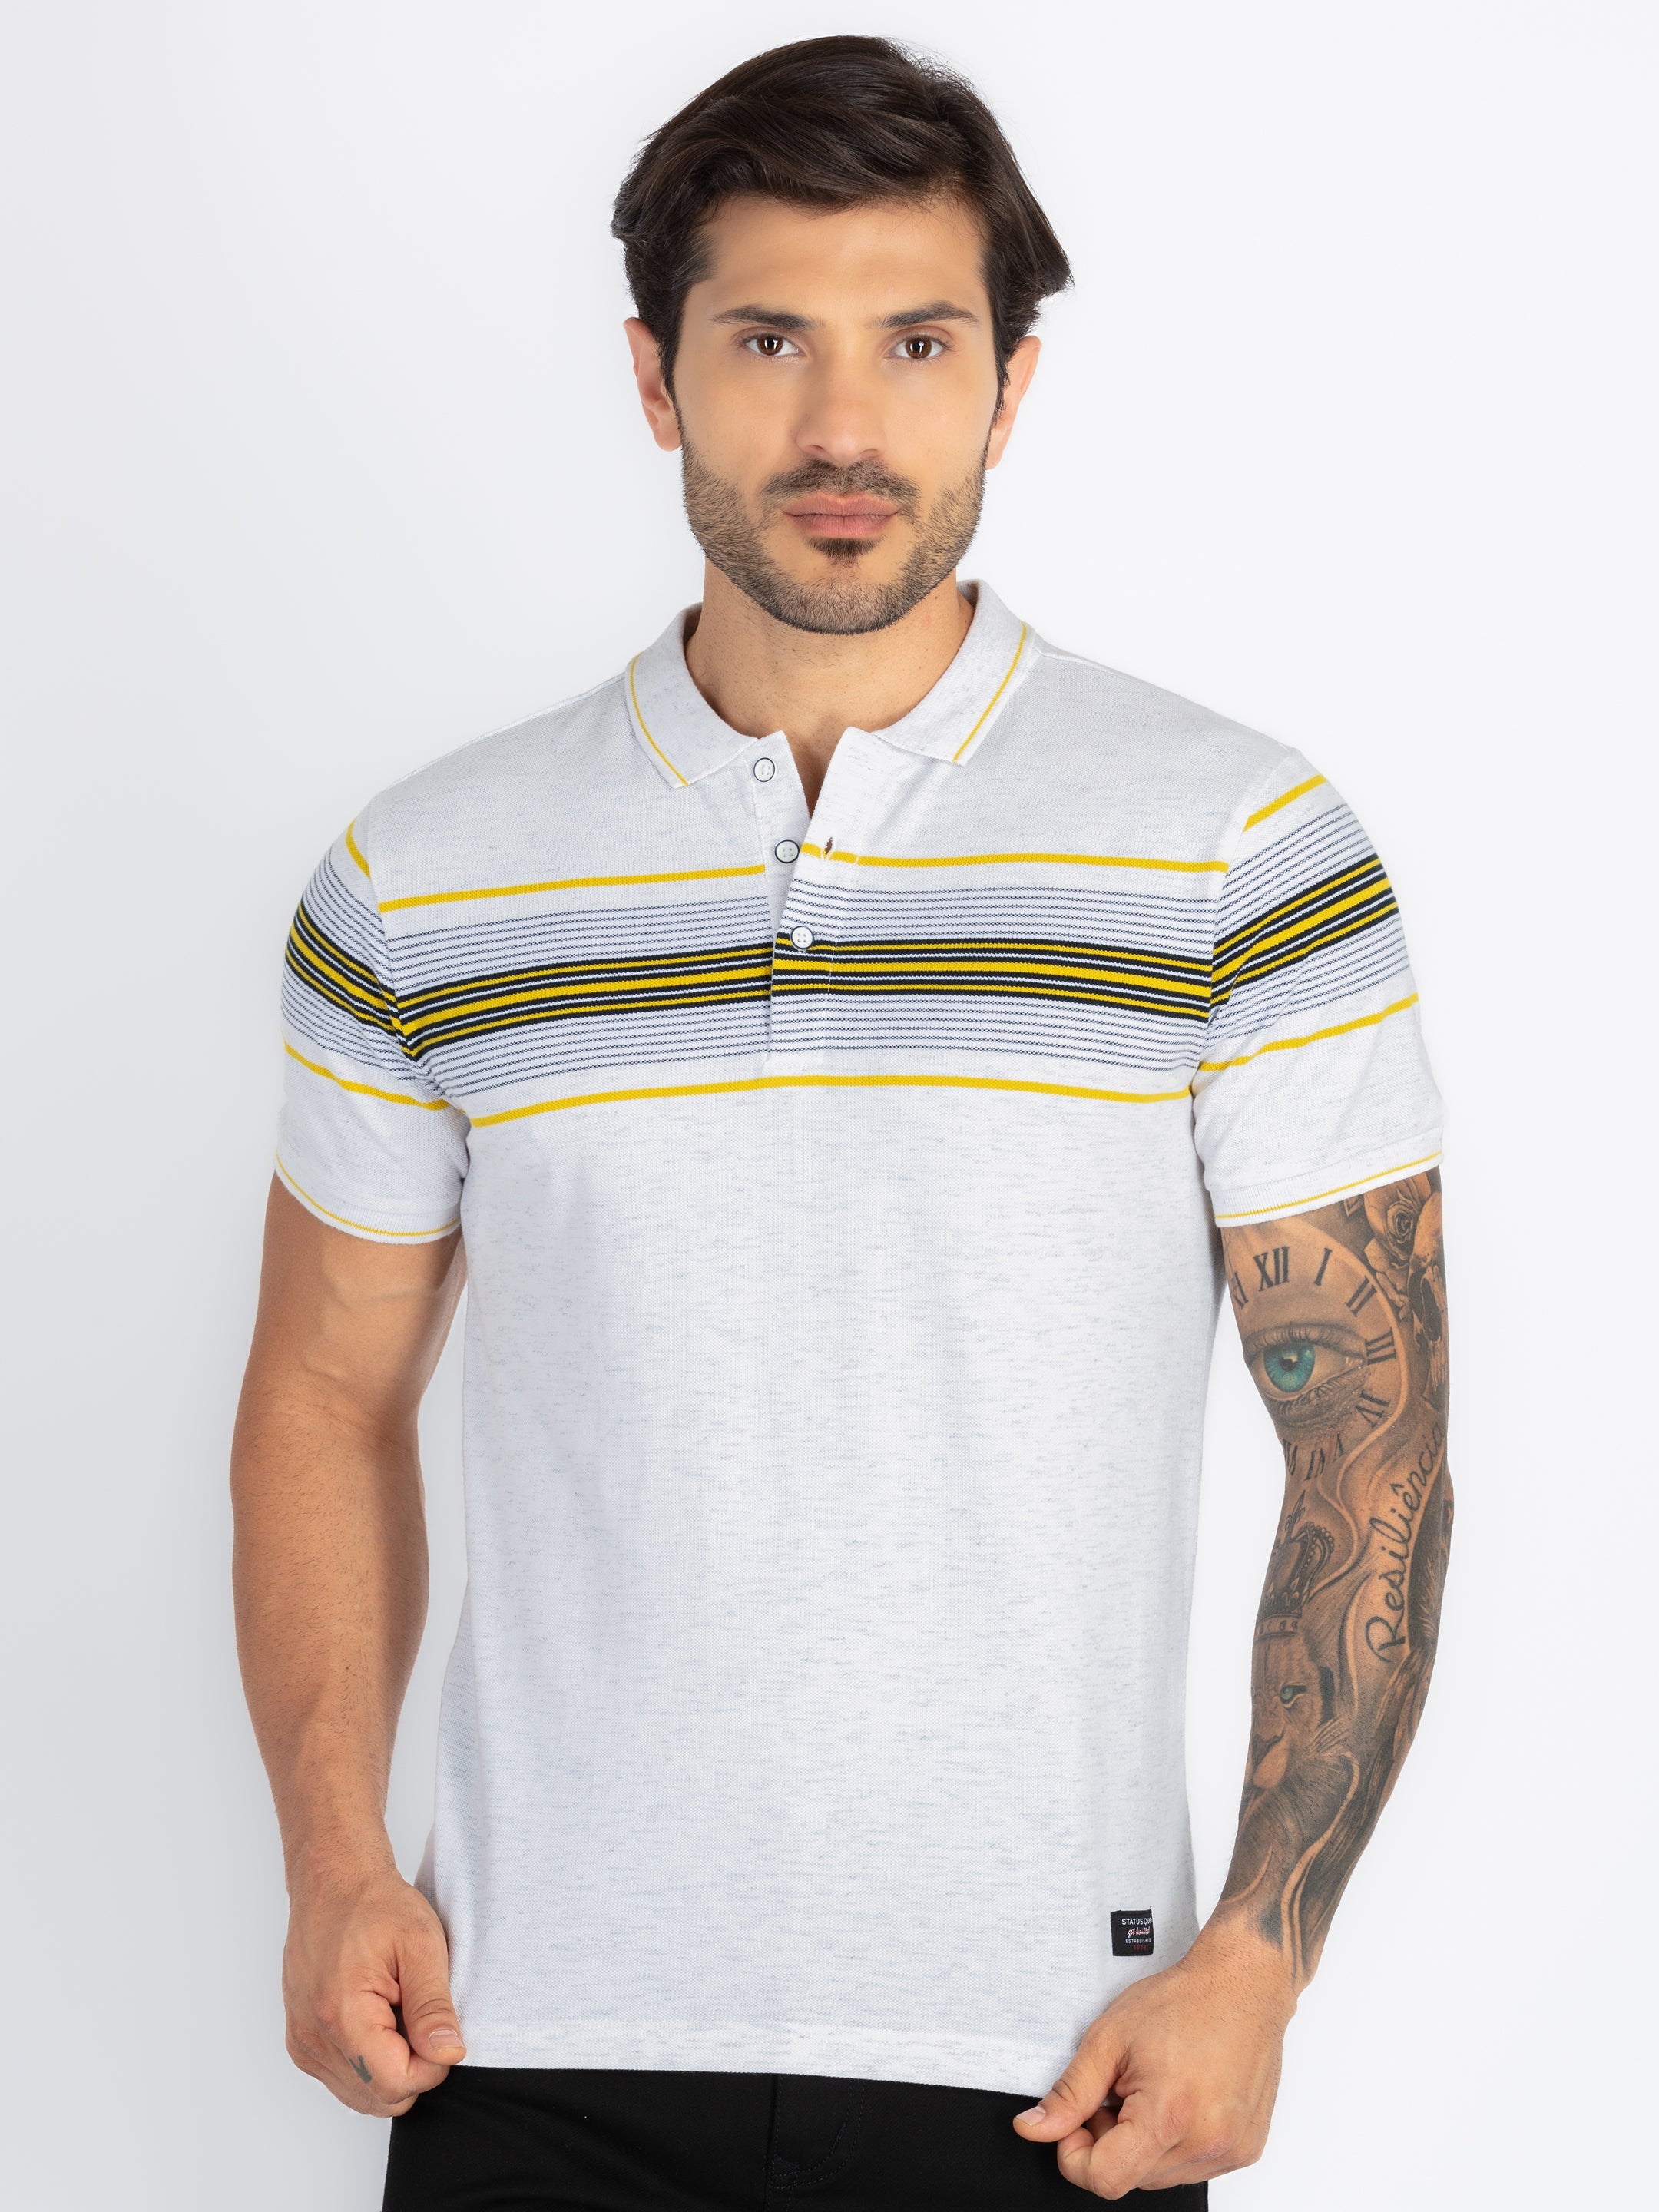 Status Quo |Men's Printed Polo T-shirt - 3XL, 4XL, 5XL